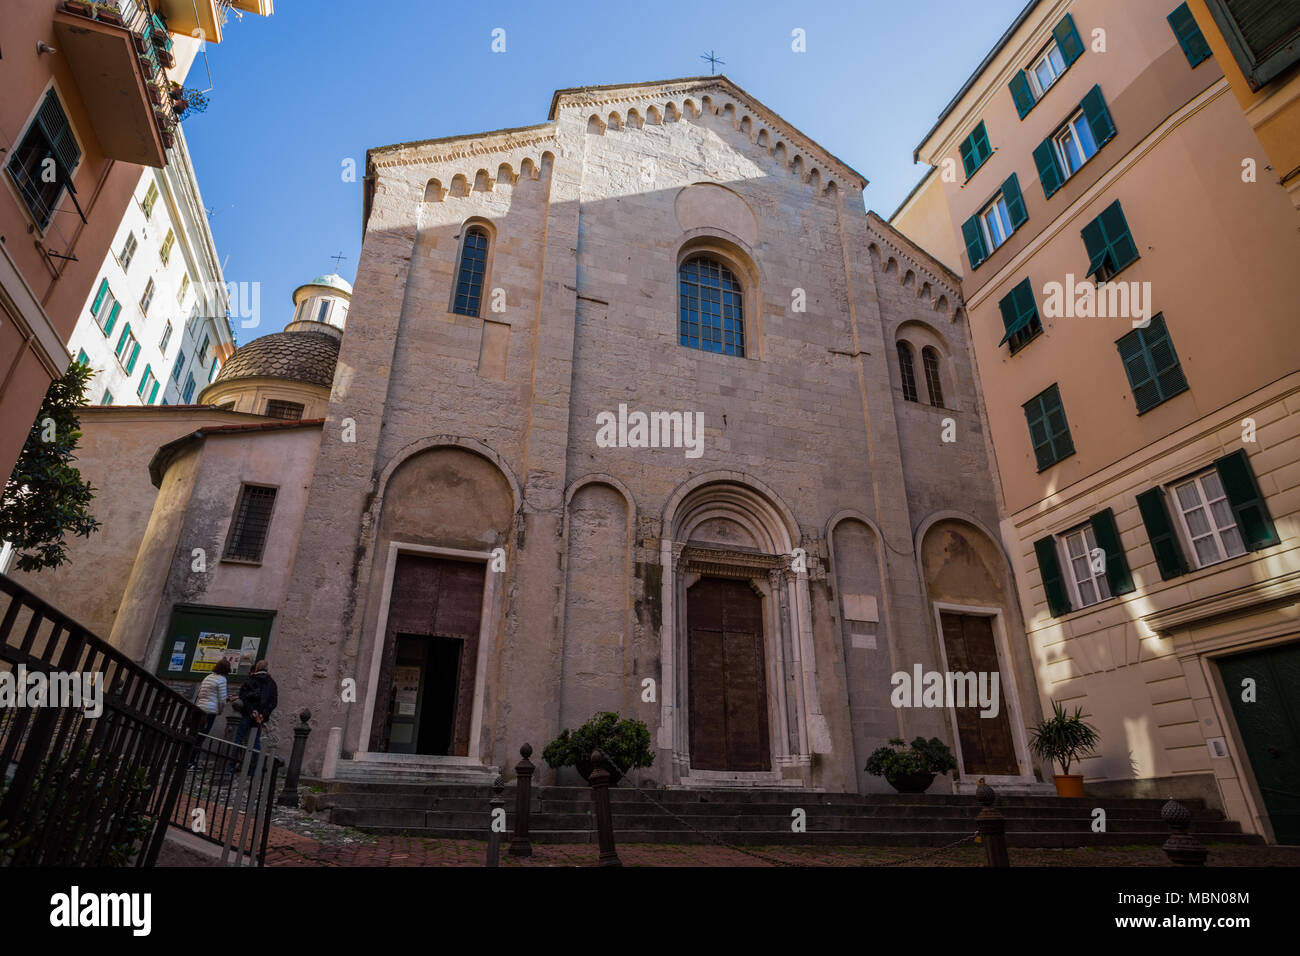 GENOA, ITALY, APRIL 5, 2018 - View of facade of Santa Maria di Castello church in old city centre of Genoa, Italy. Stock Photo